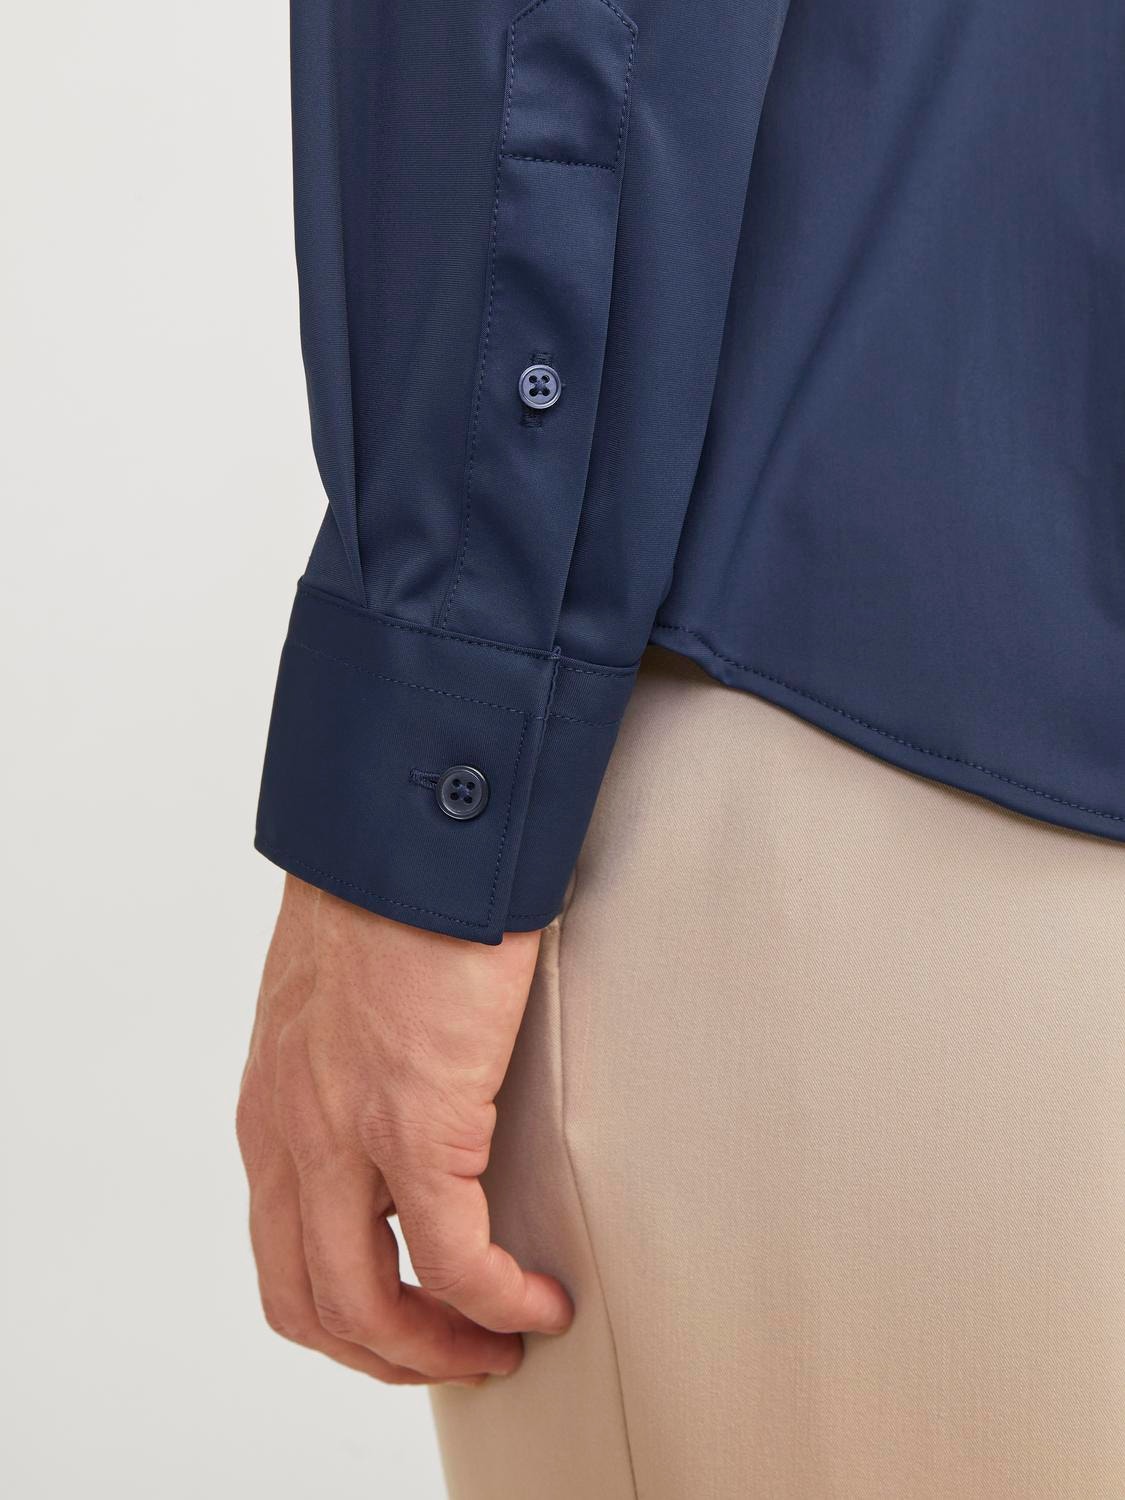 Jack & Jones Camisa Formal Slim Fit -Navy Blazer - 12241530